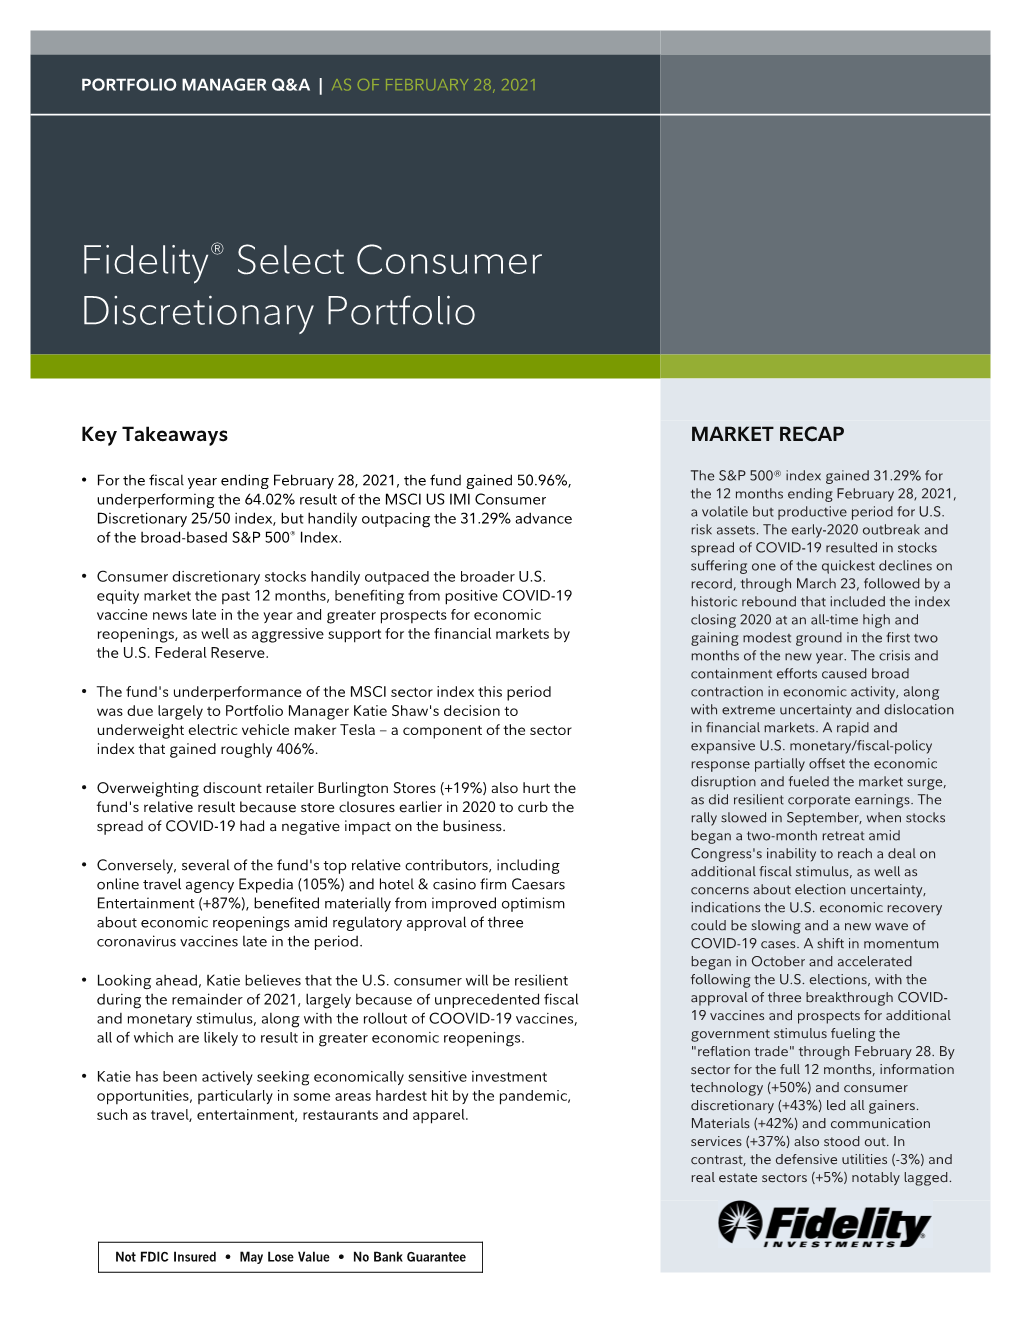 Fidelity® Select Consumer Discretionary Portfolio